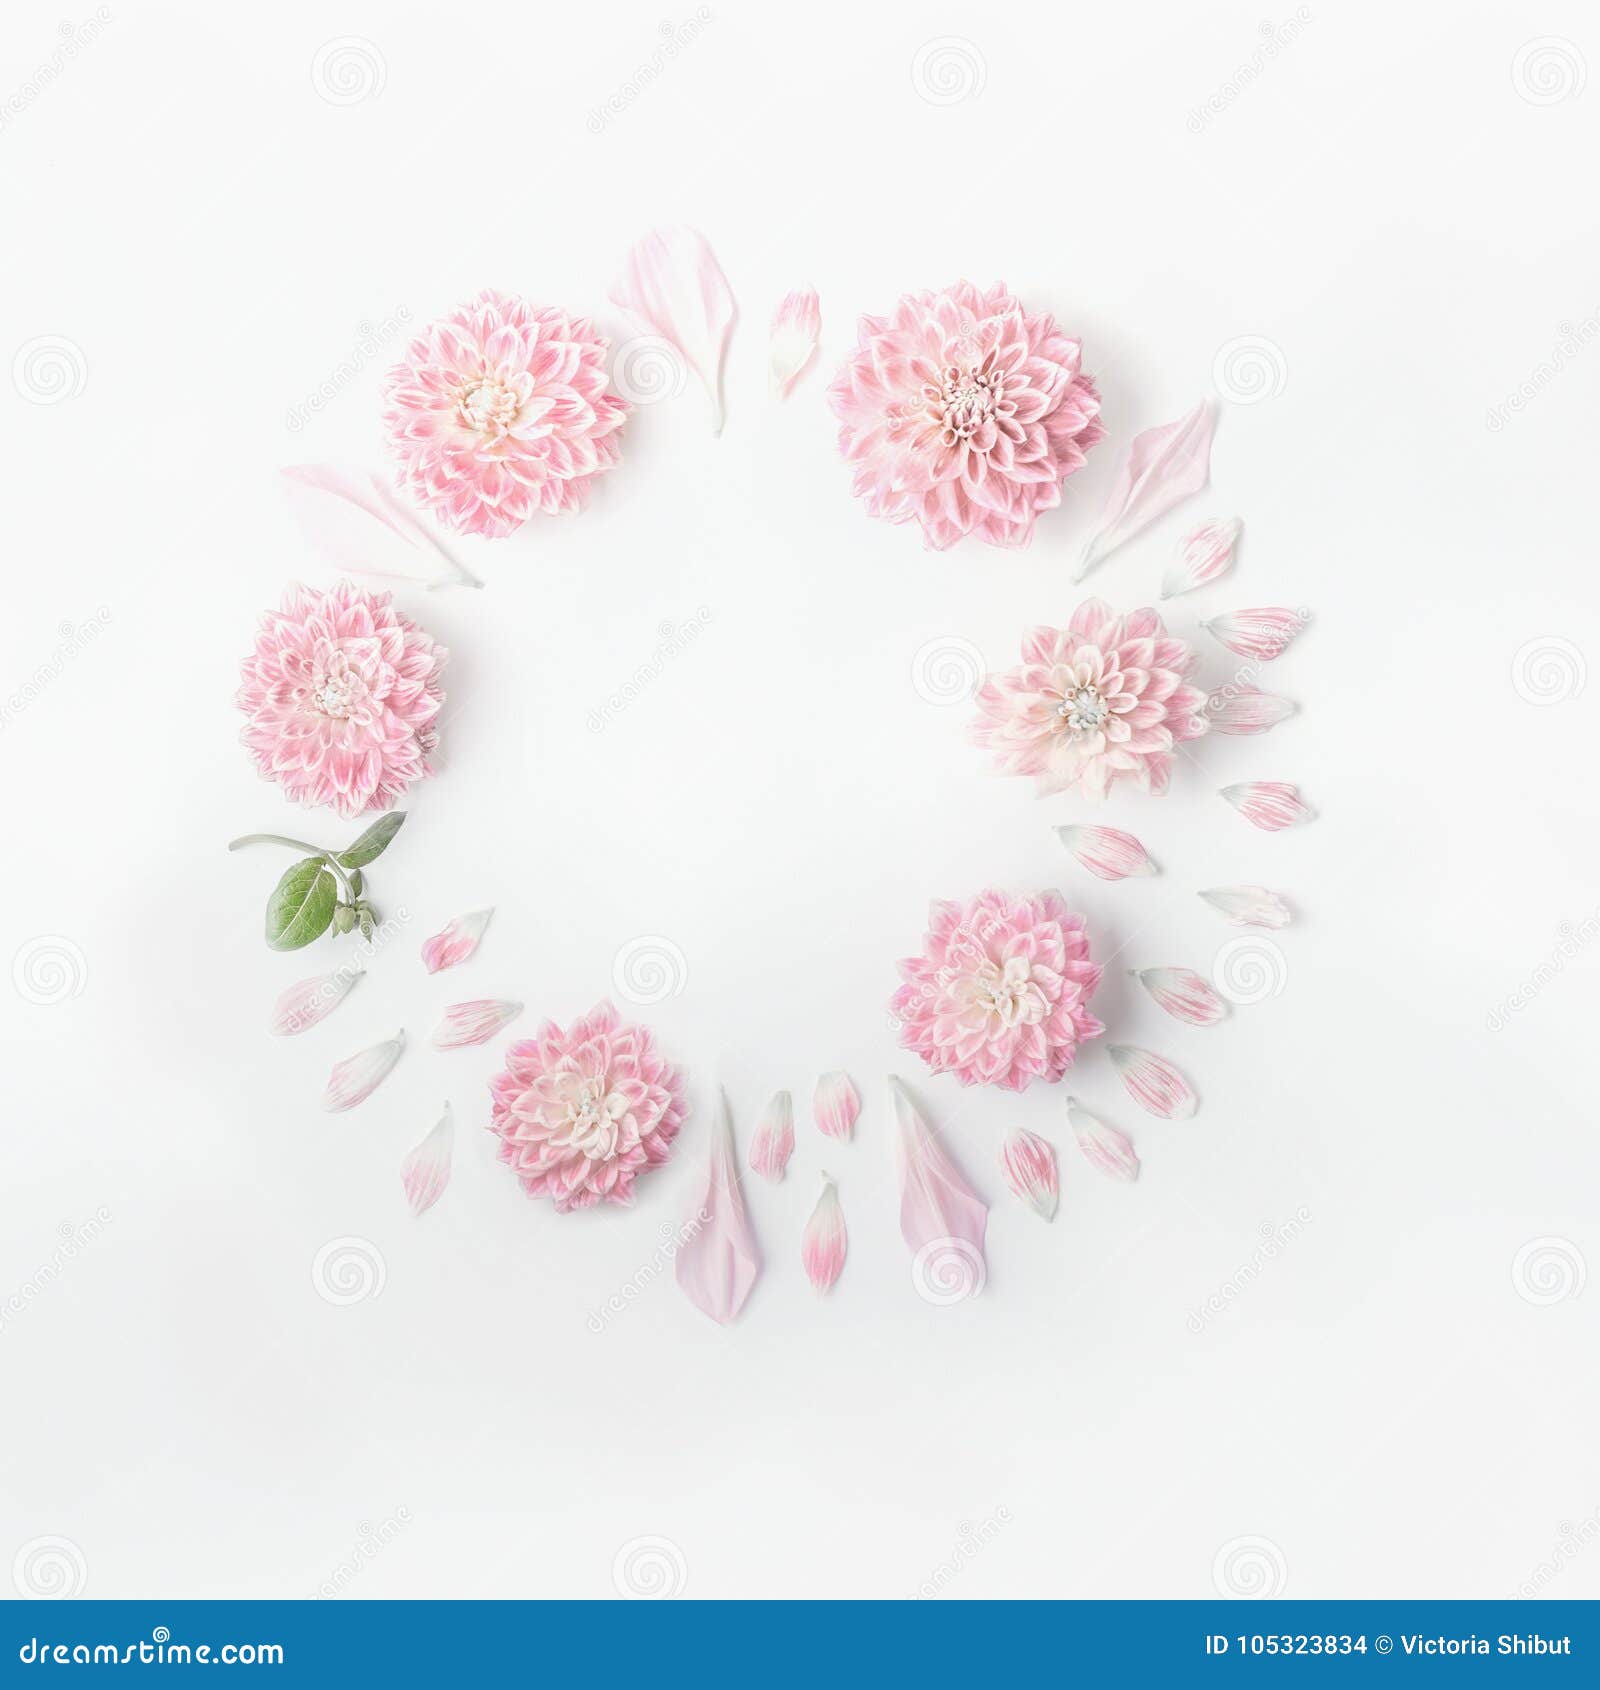 Hermosas Fotos De Rosas Para Descargar Imprimir O Usar En Donde Gustes Libres D Fondos Color Rosa Fondo De Pantalla Rosado Para Iphone Fondos De Flores Rosas